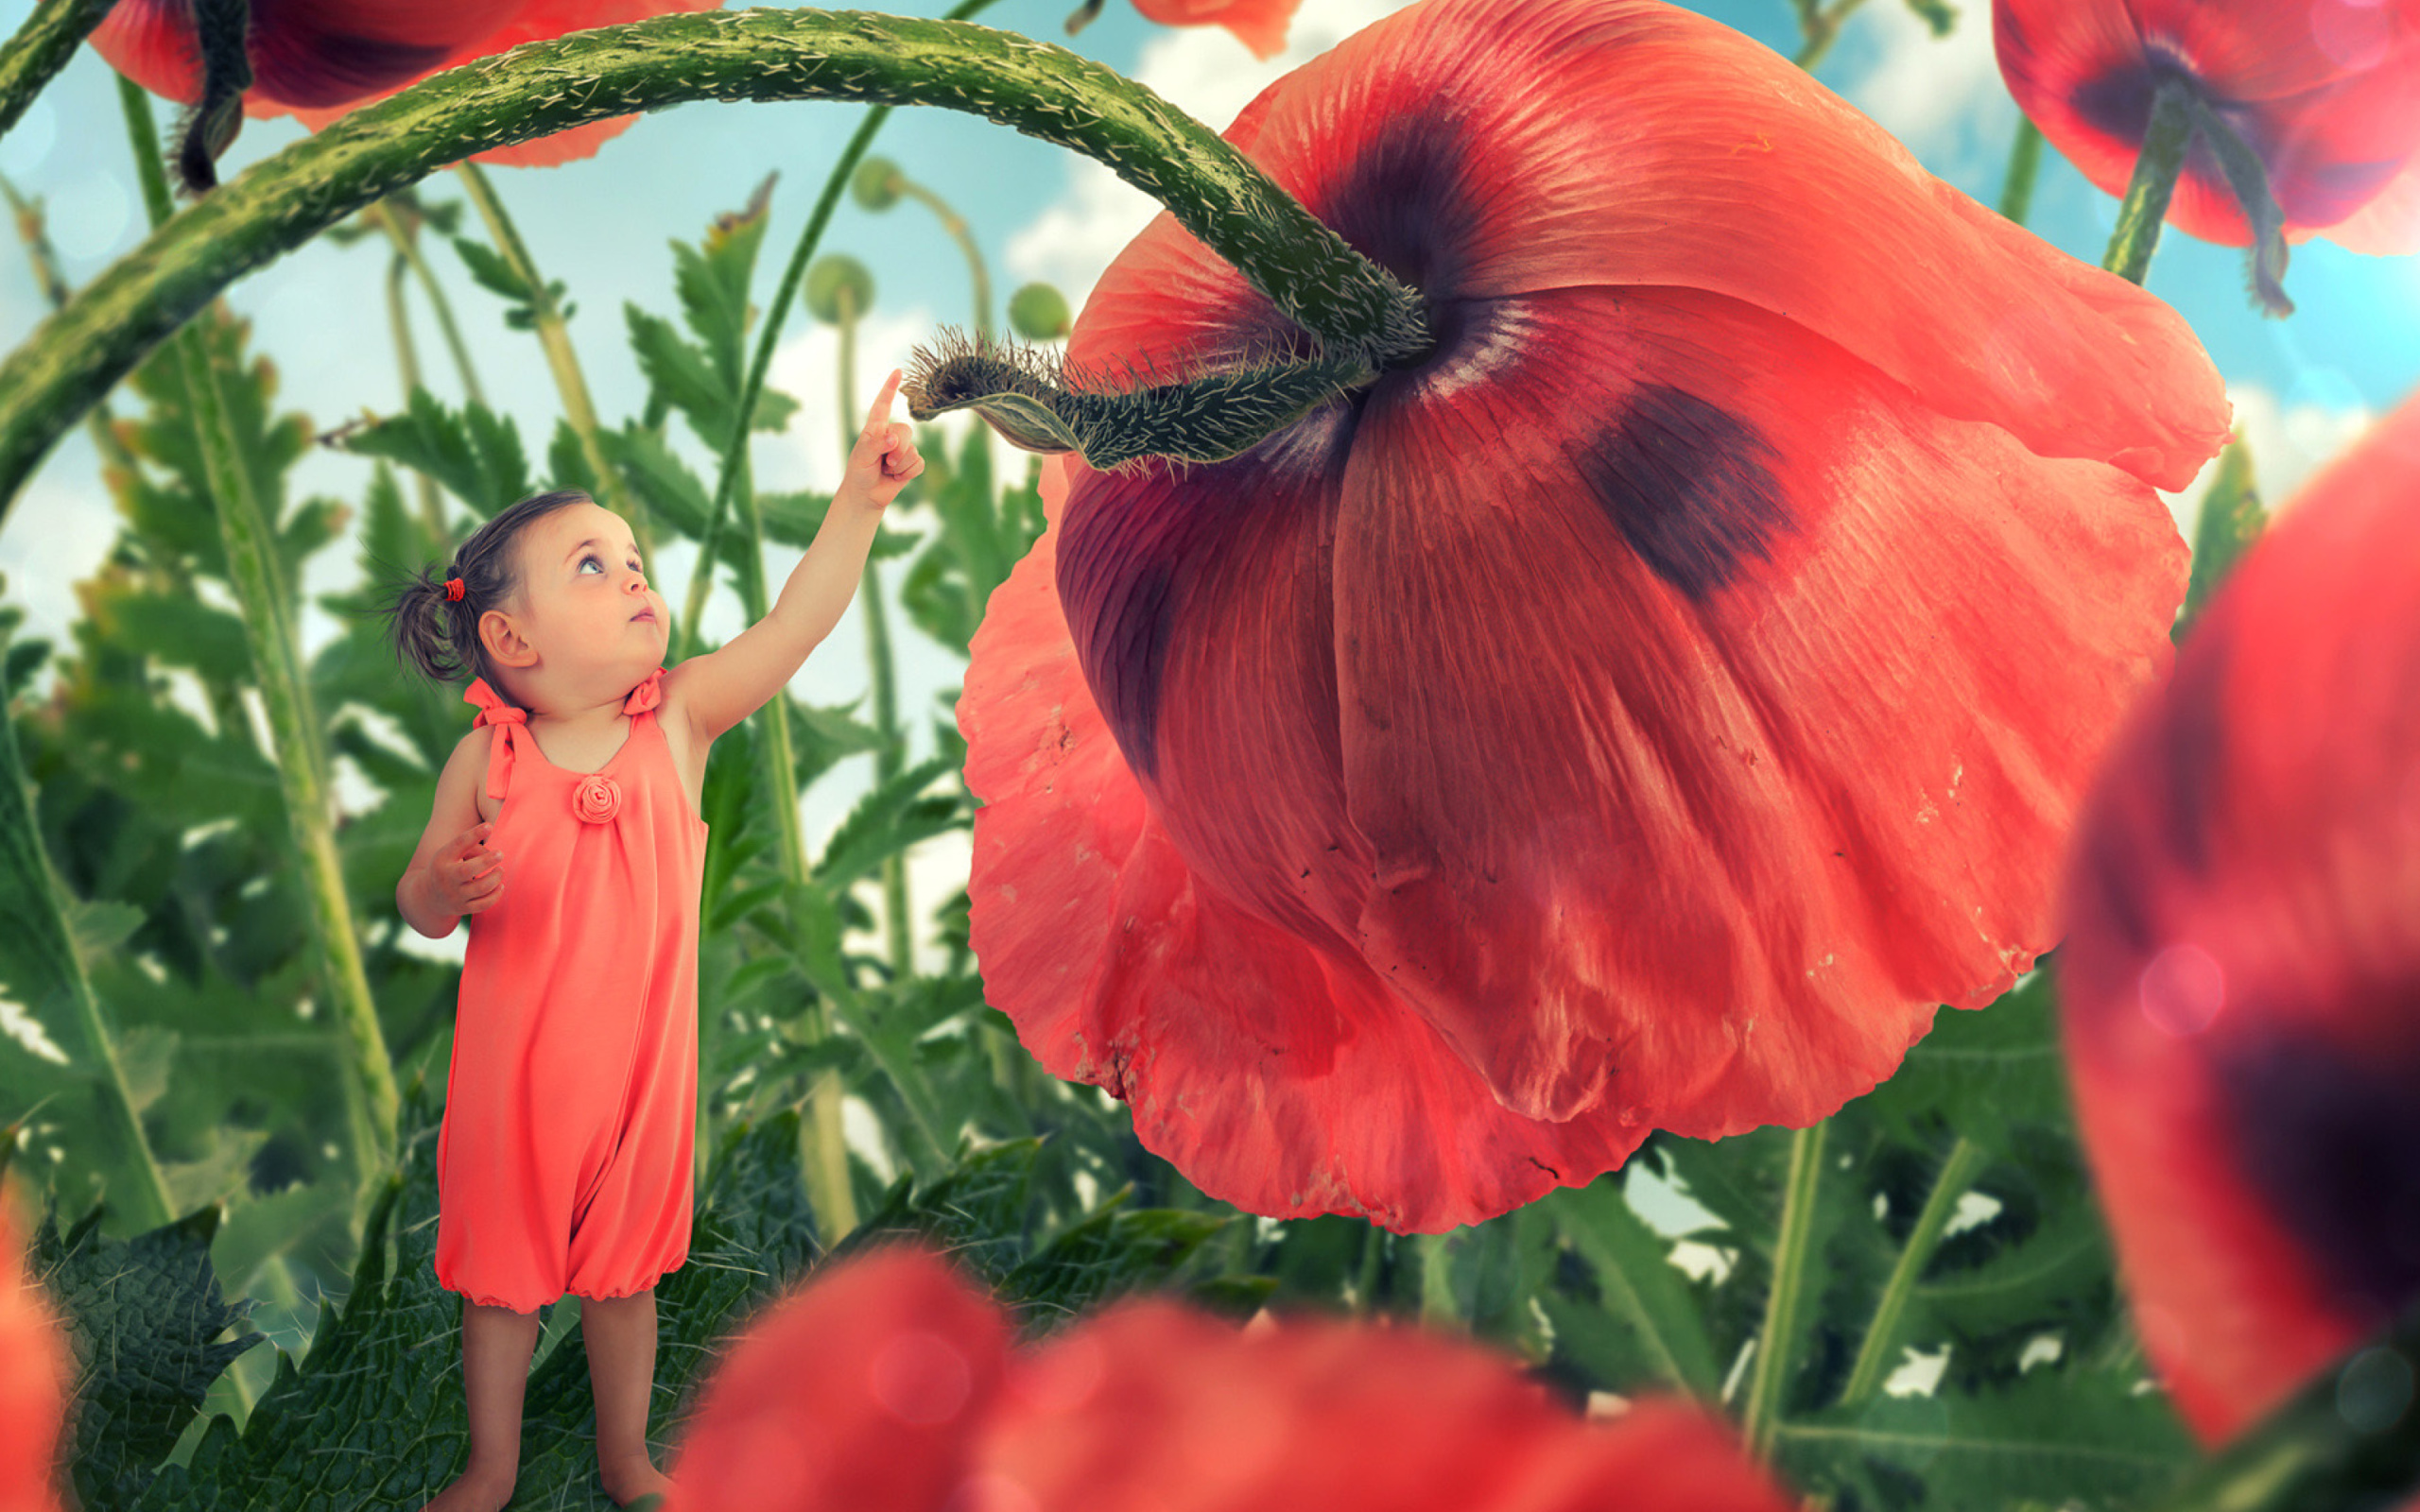 Das Little kid on poppy flower Wallpaper 2560x1600